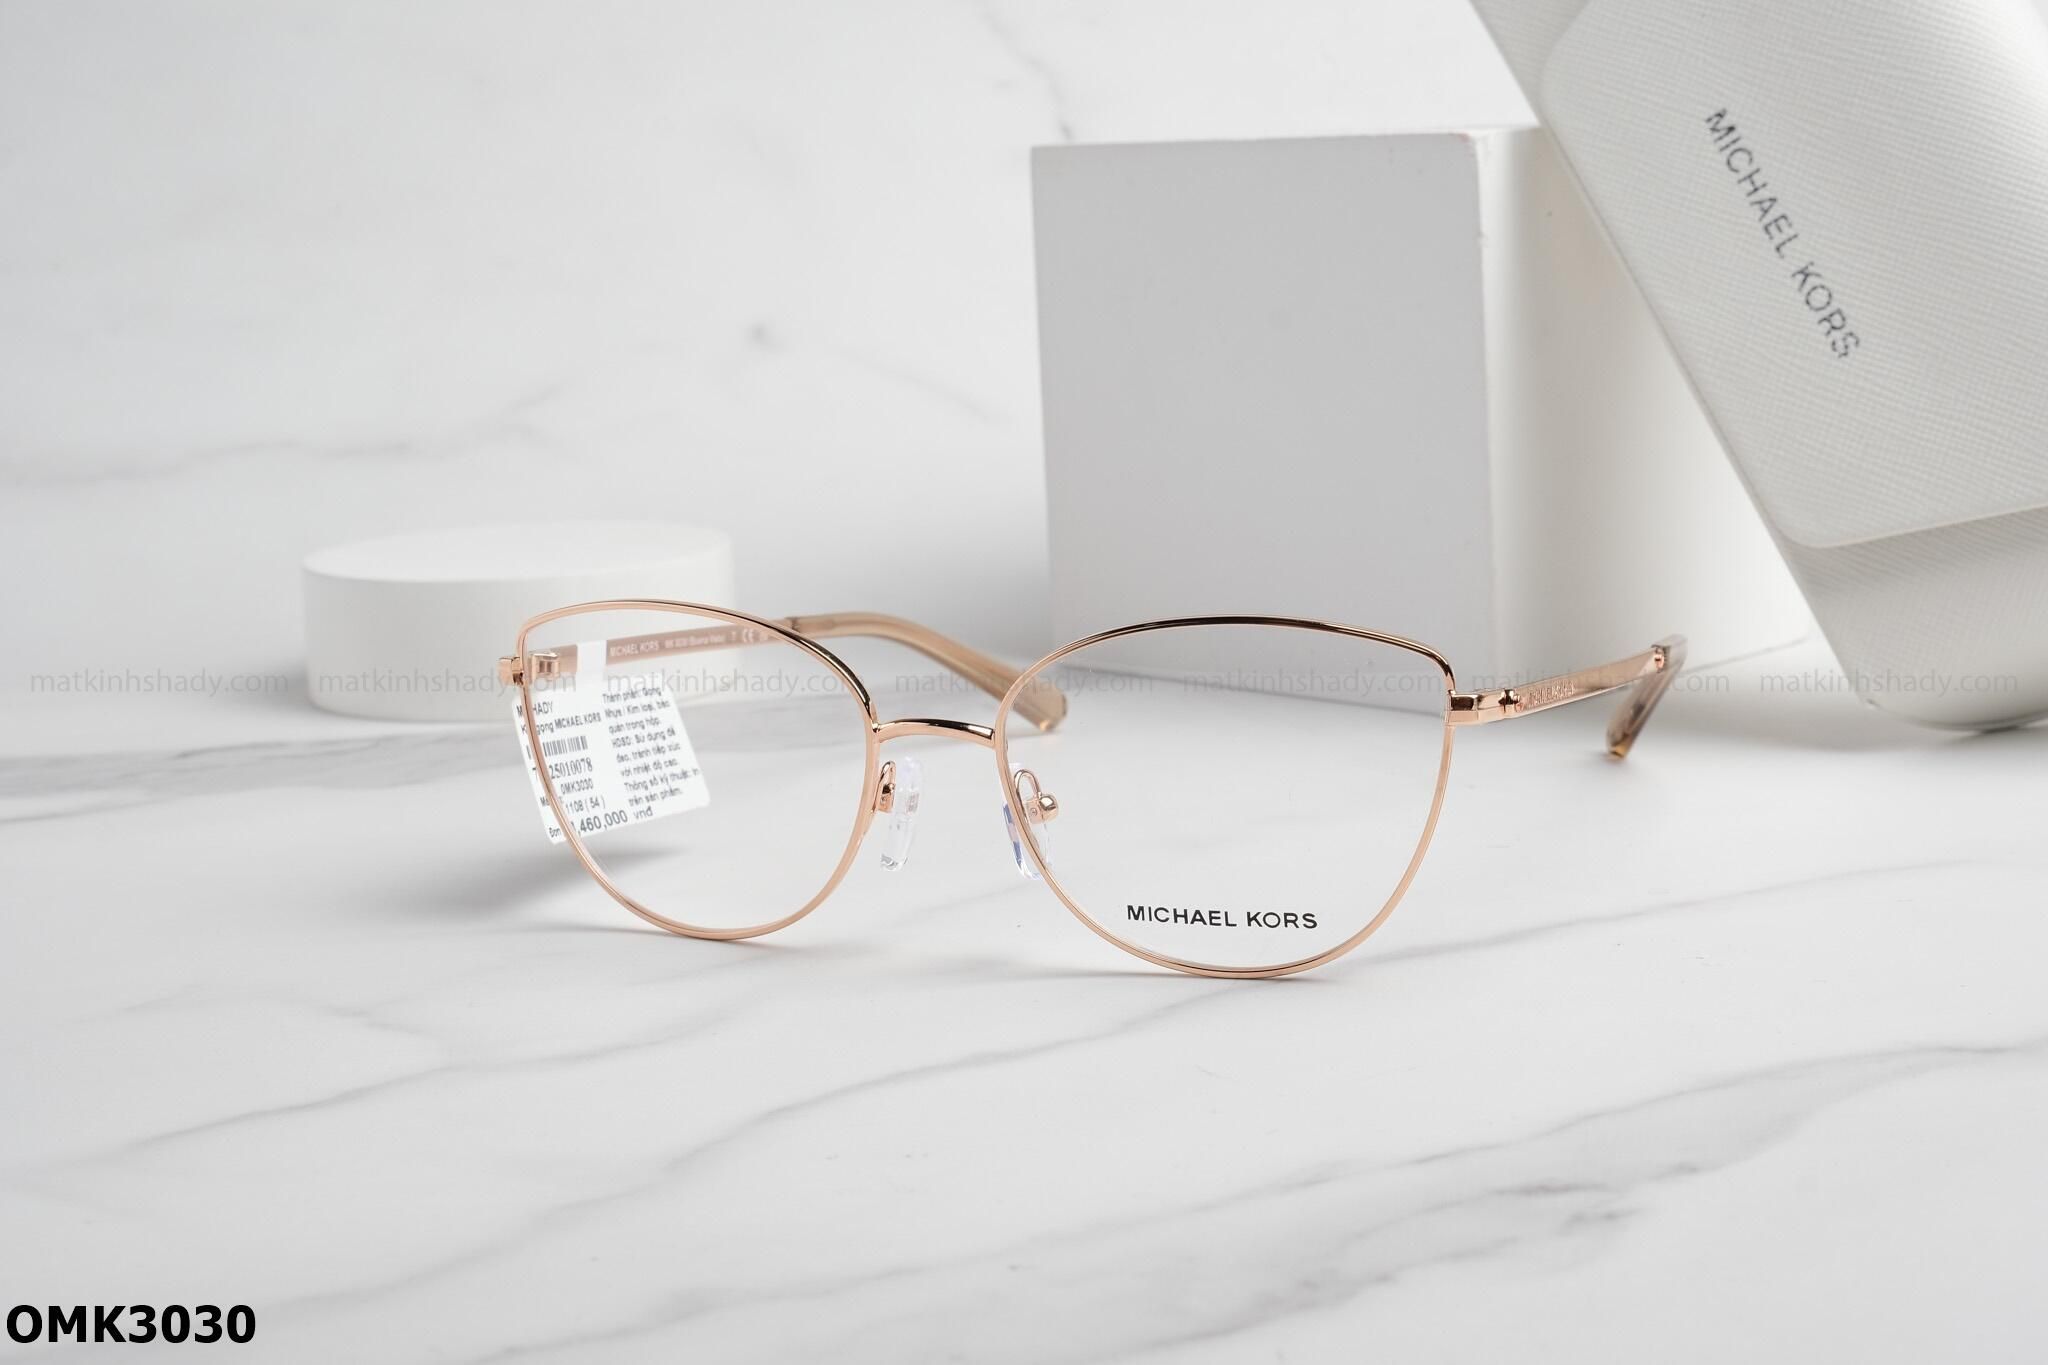  Michael Kors Eyewear - Glasses - OMK3030 